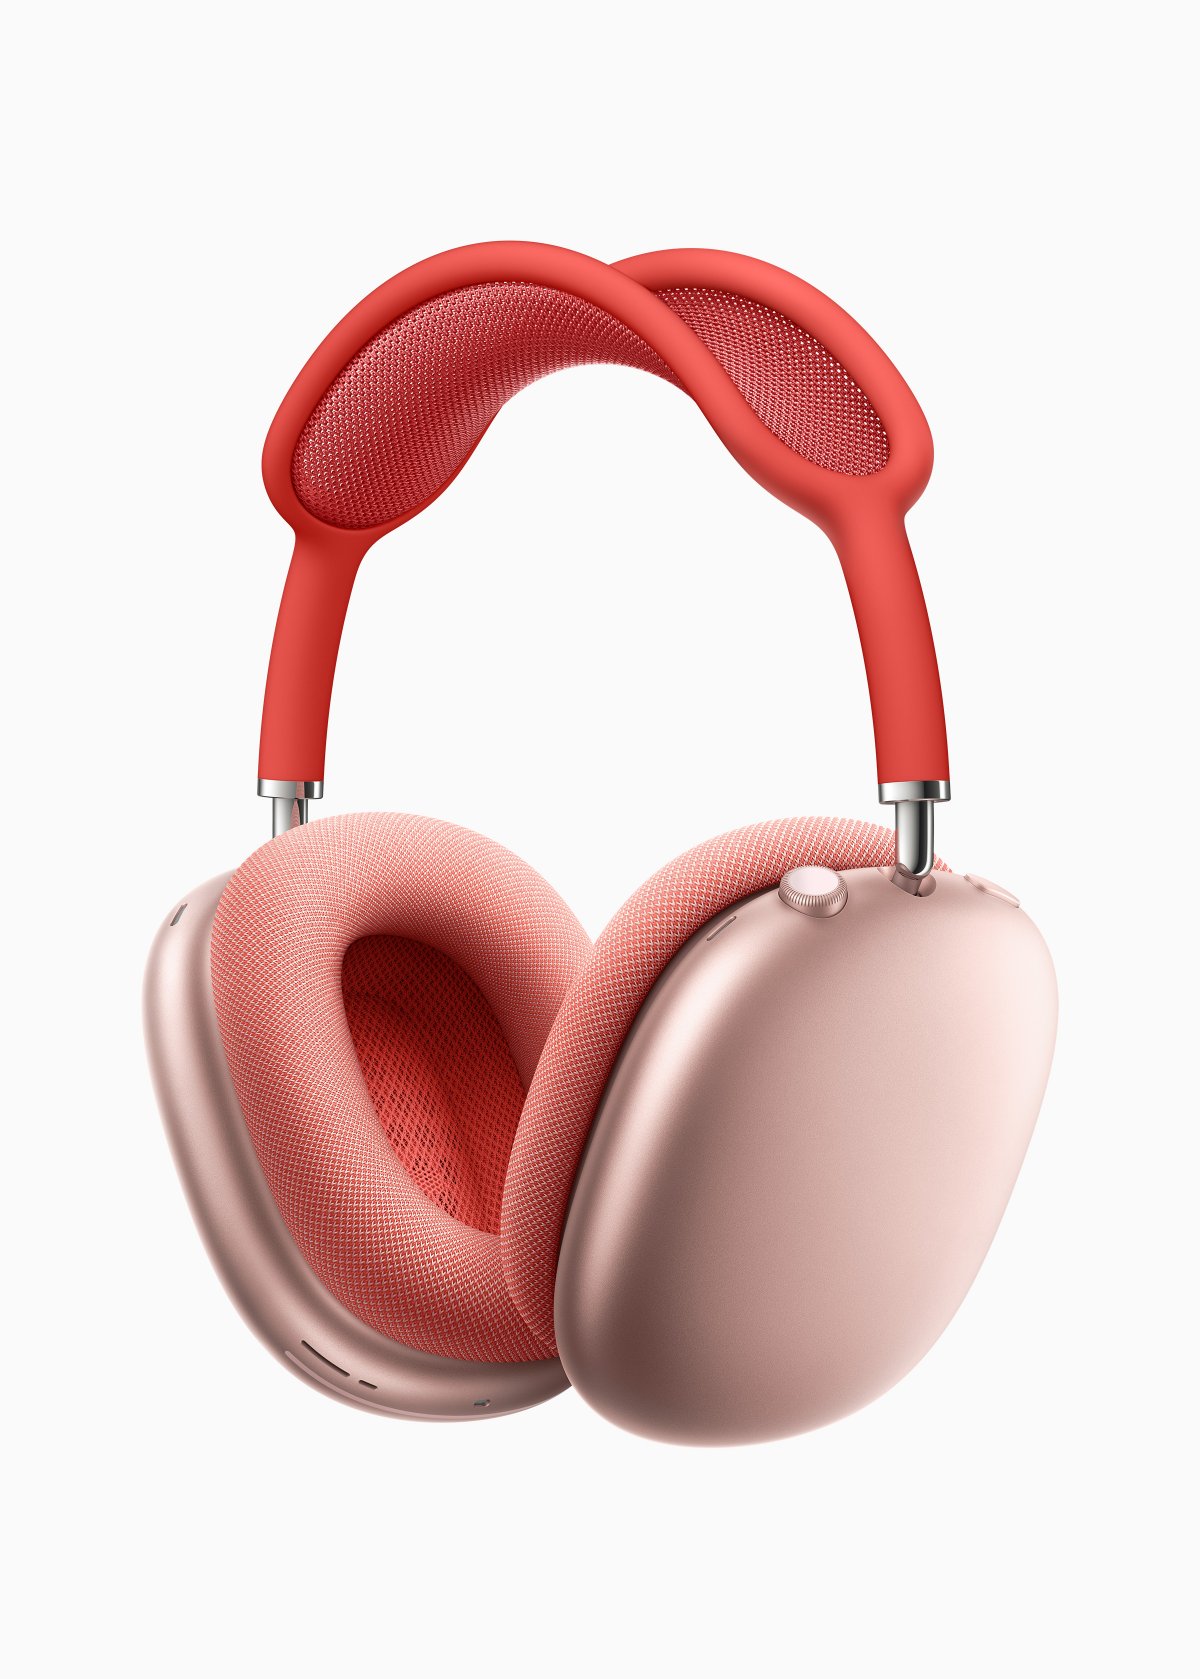 Apple's AirPods Max headphones.